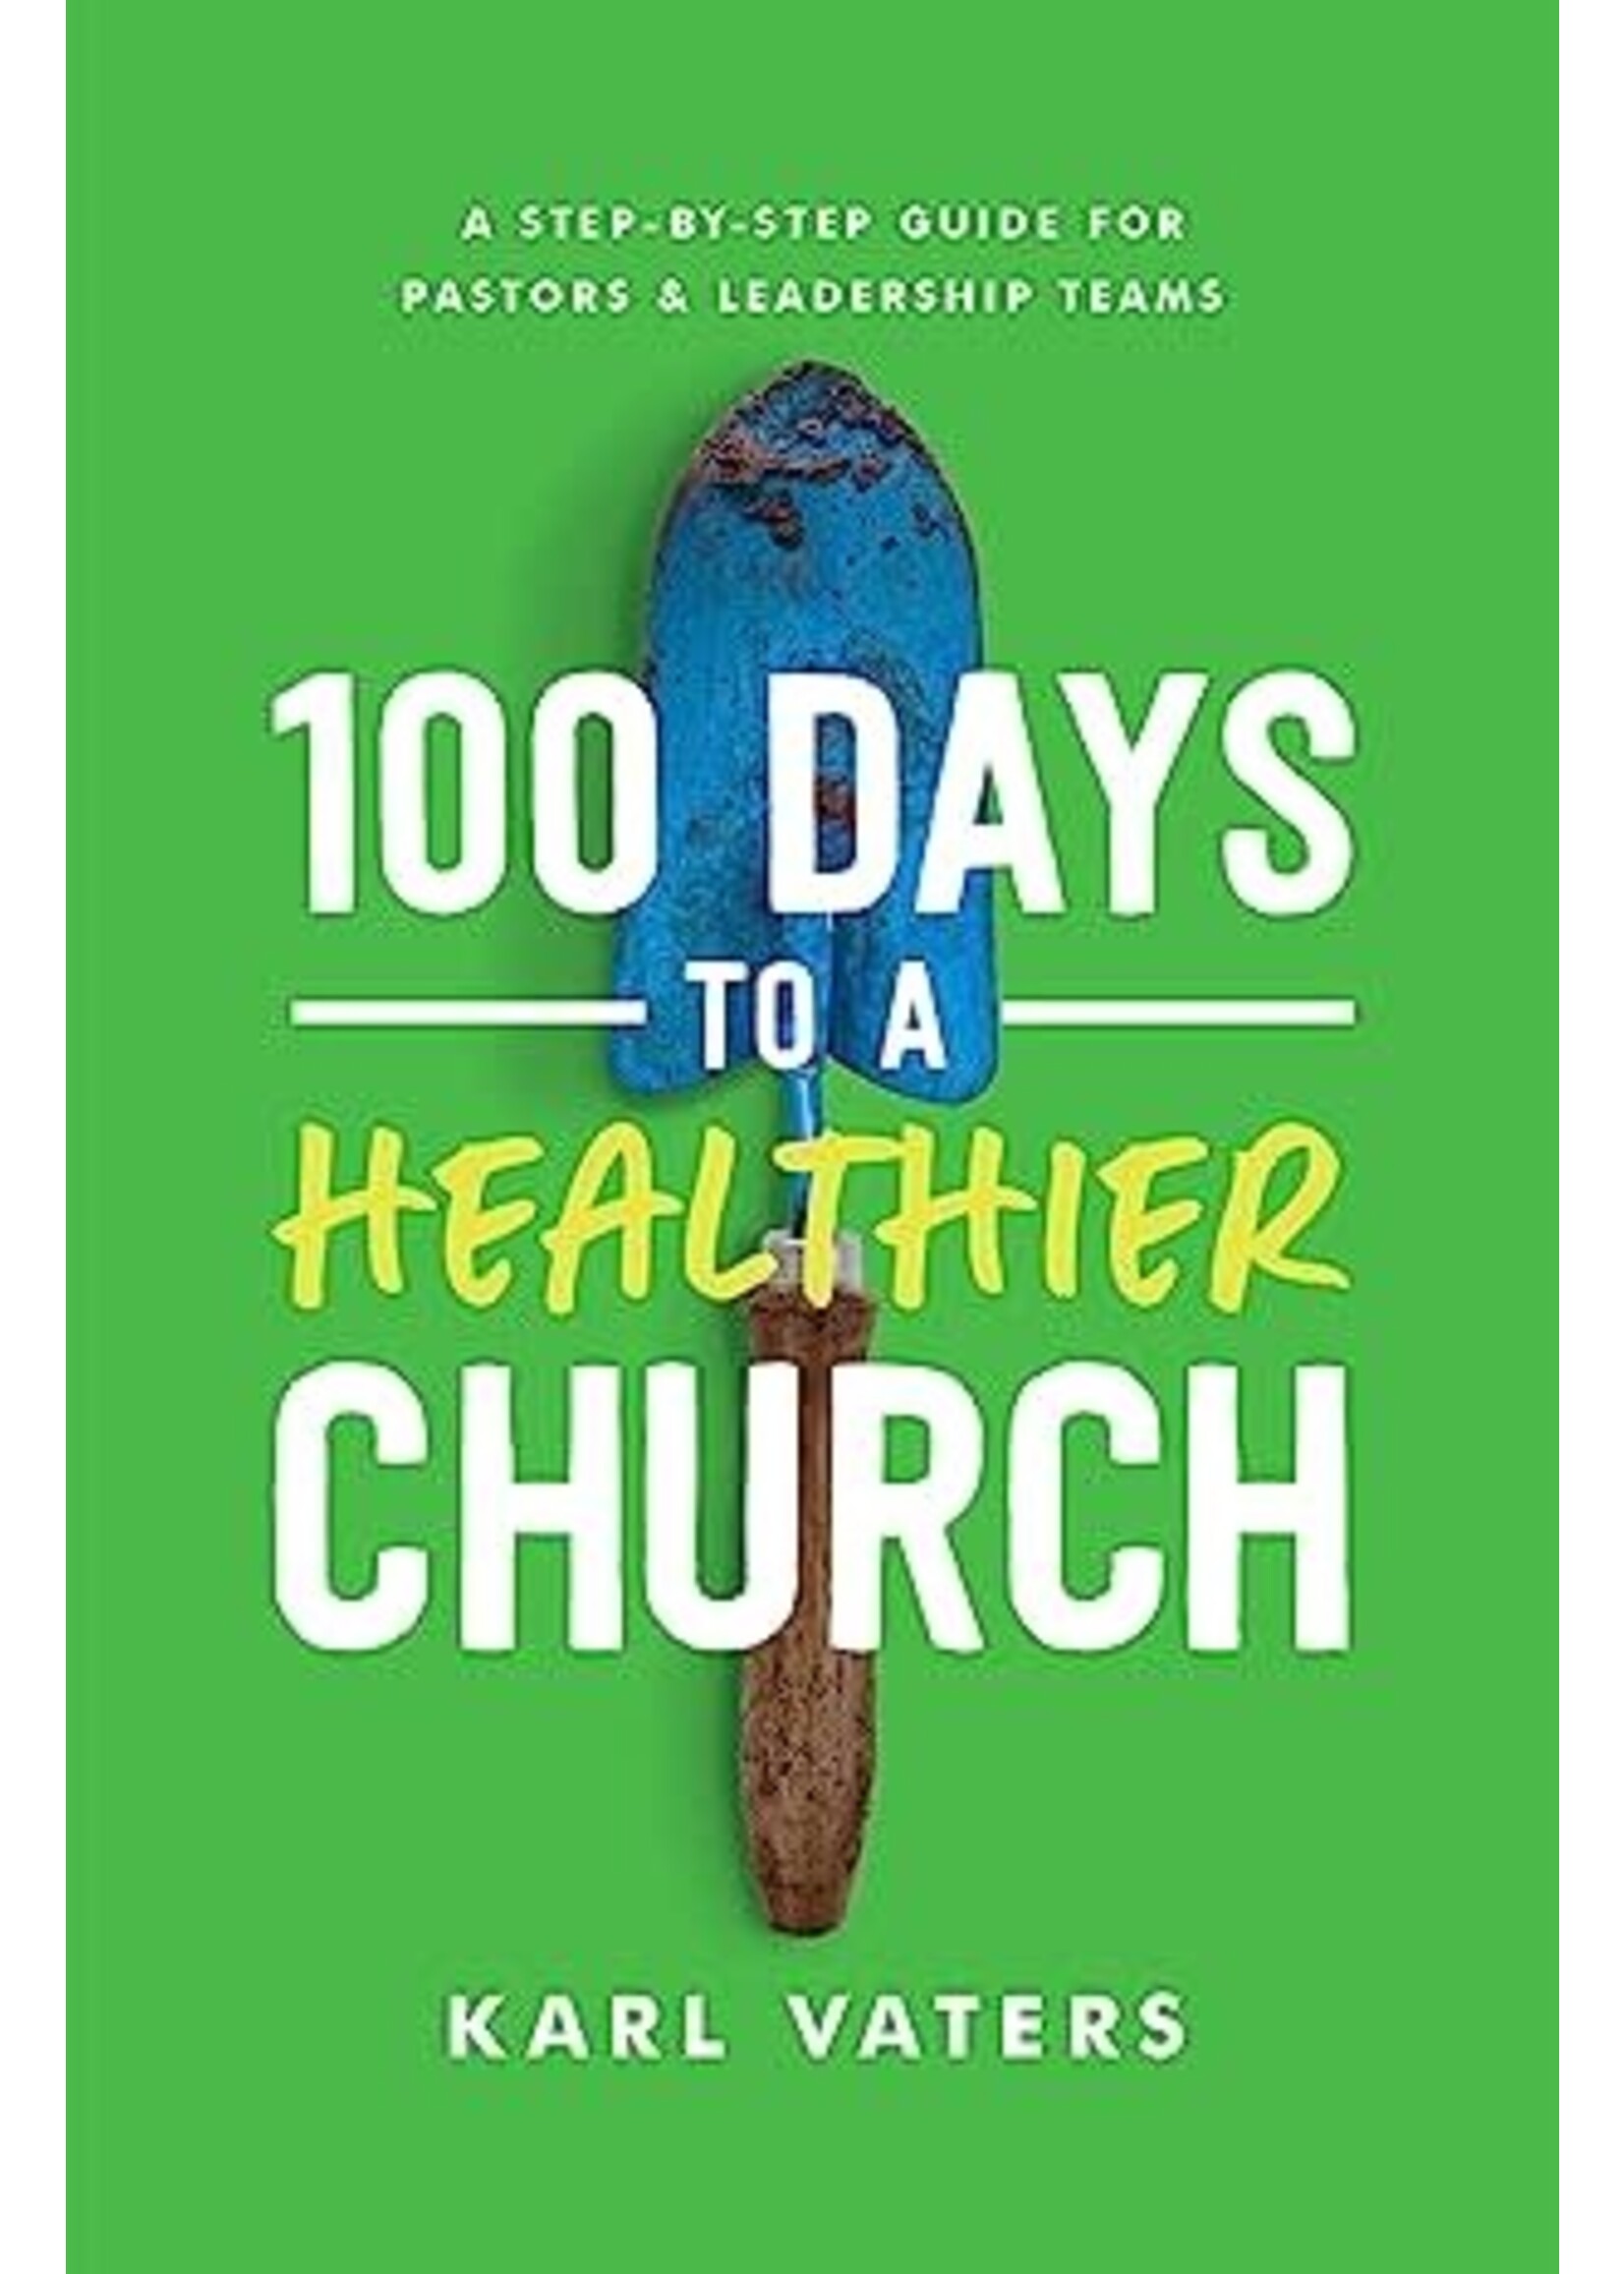 100 DAYS TO A HEALTHIER CHURCH